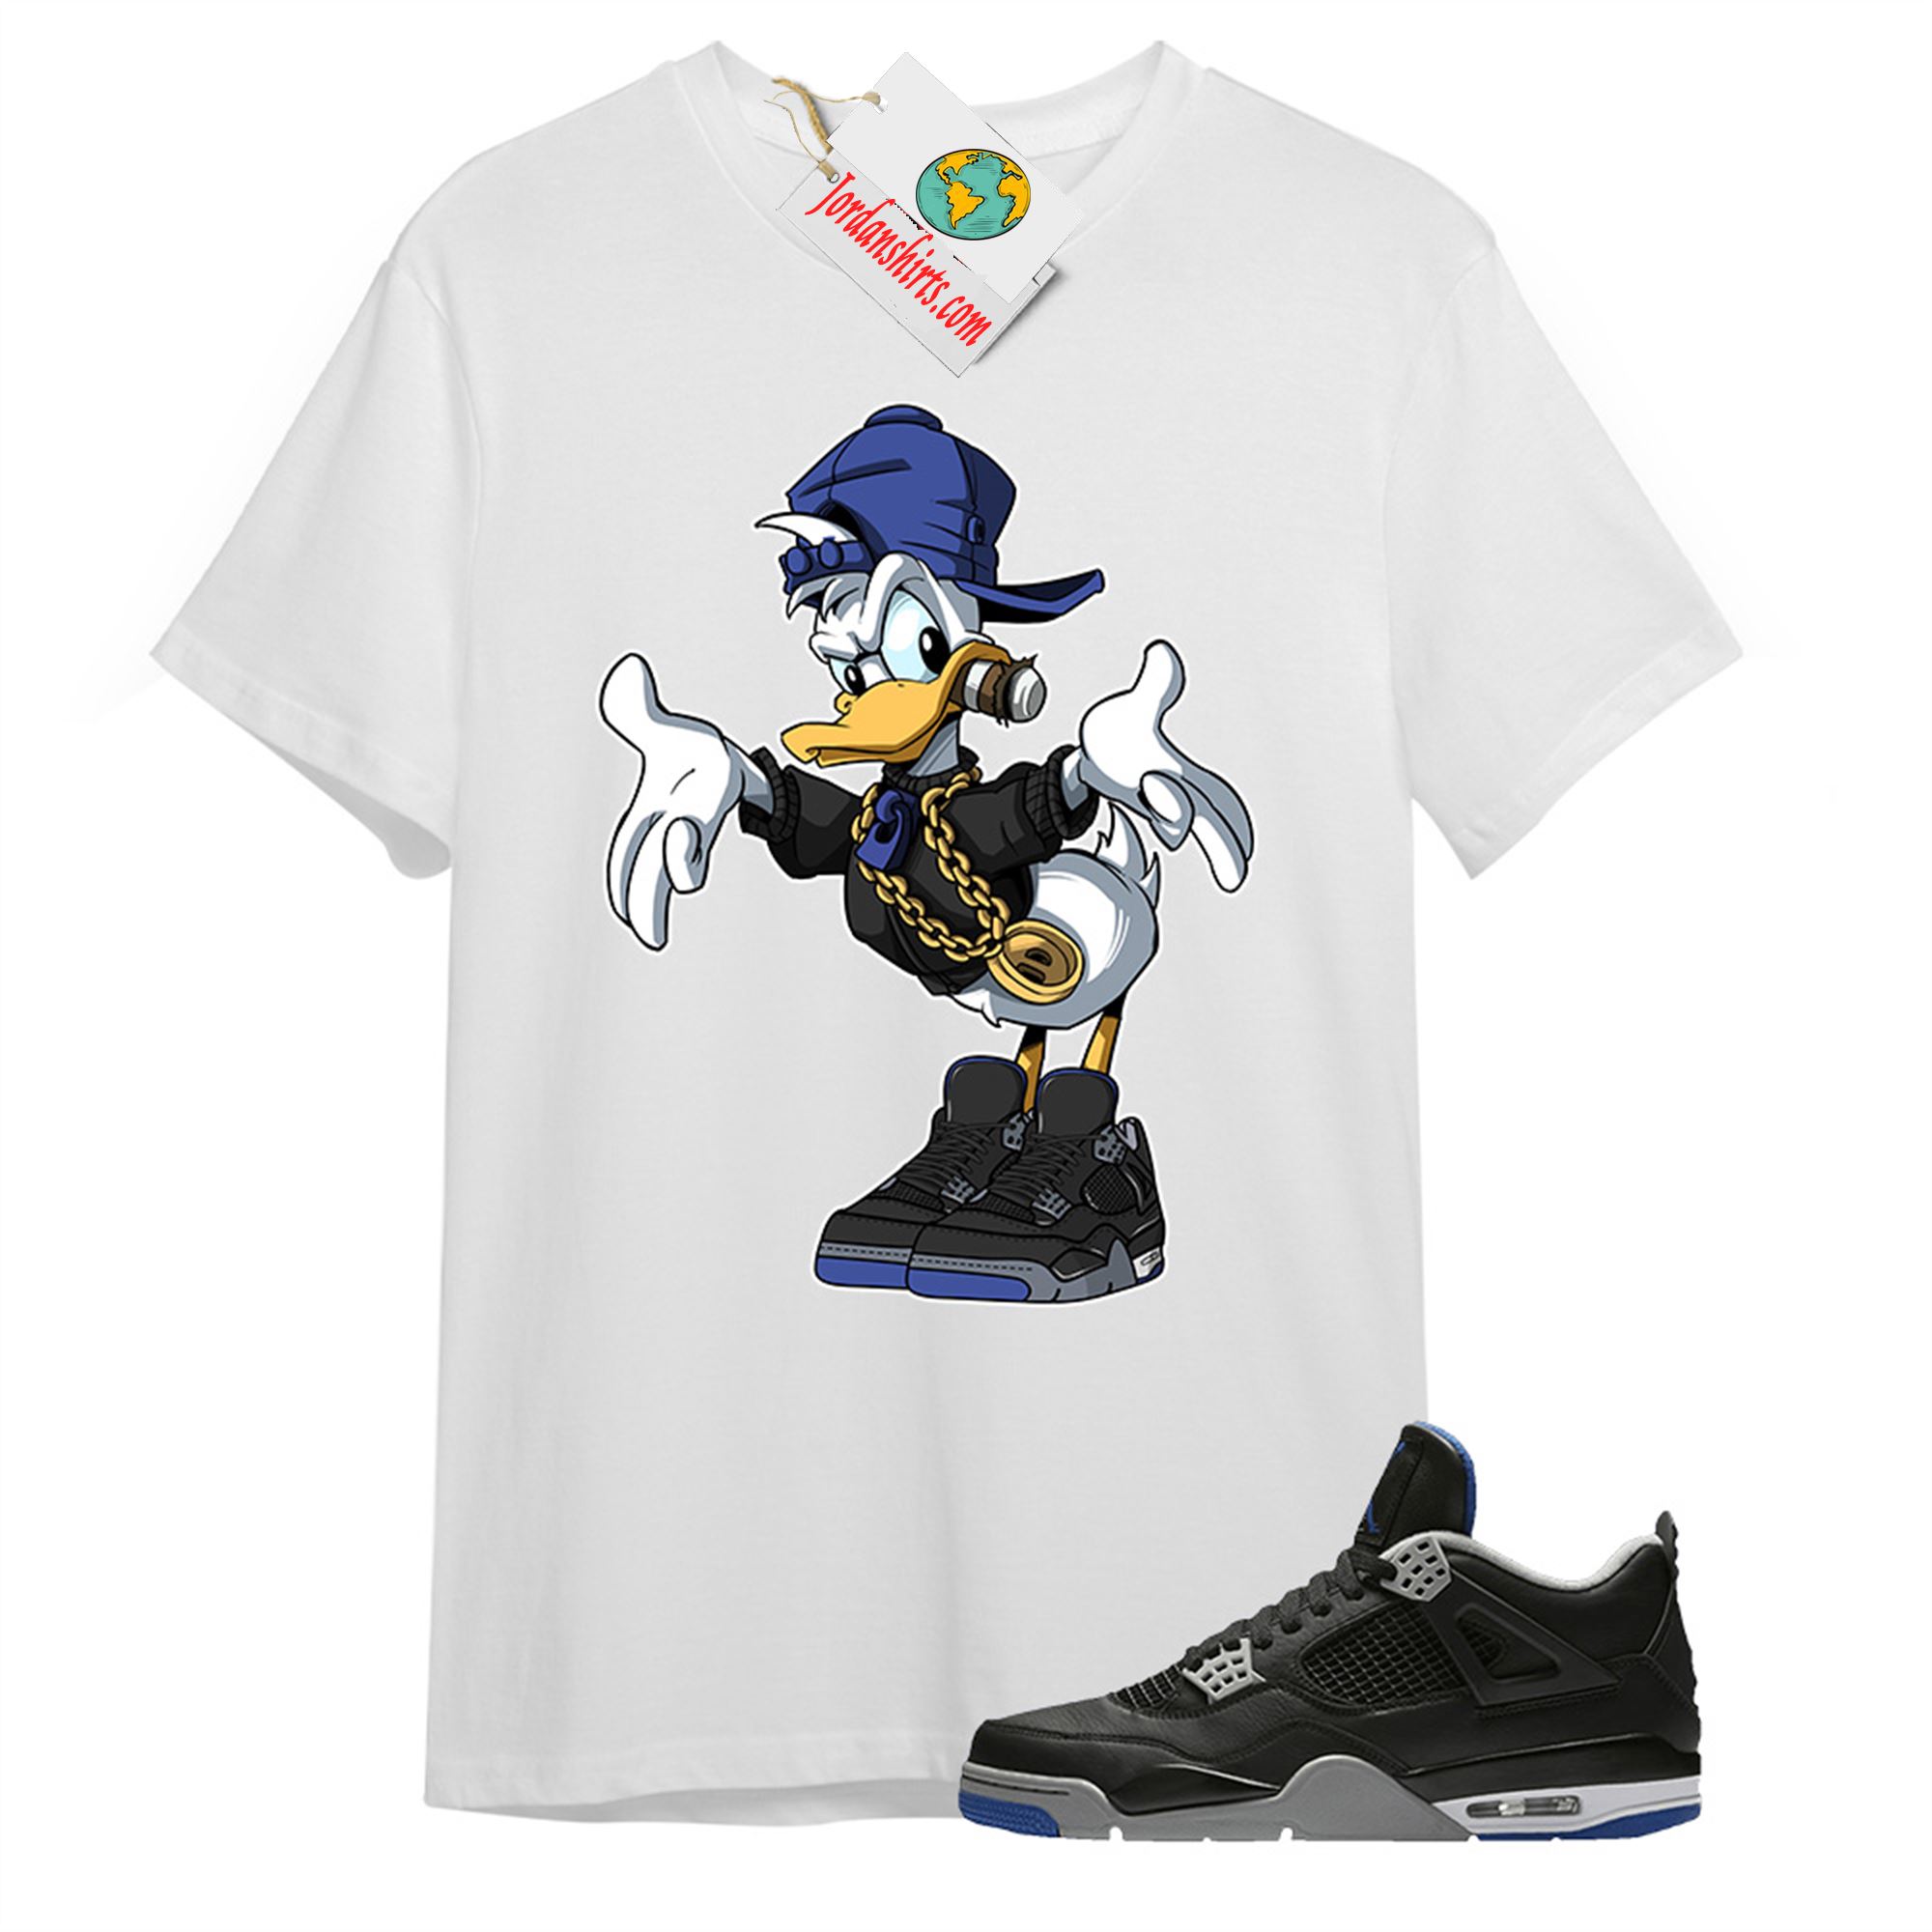 Jordan 4 Shirt, Donald Duck White T-shirt Air Jordan 4 Motorsport Alternate 4s Plus Size Up To 5xl